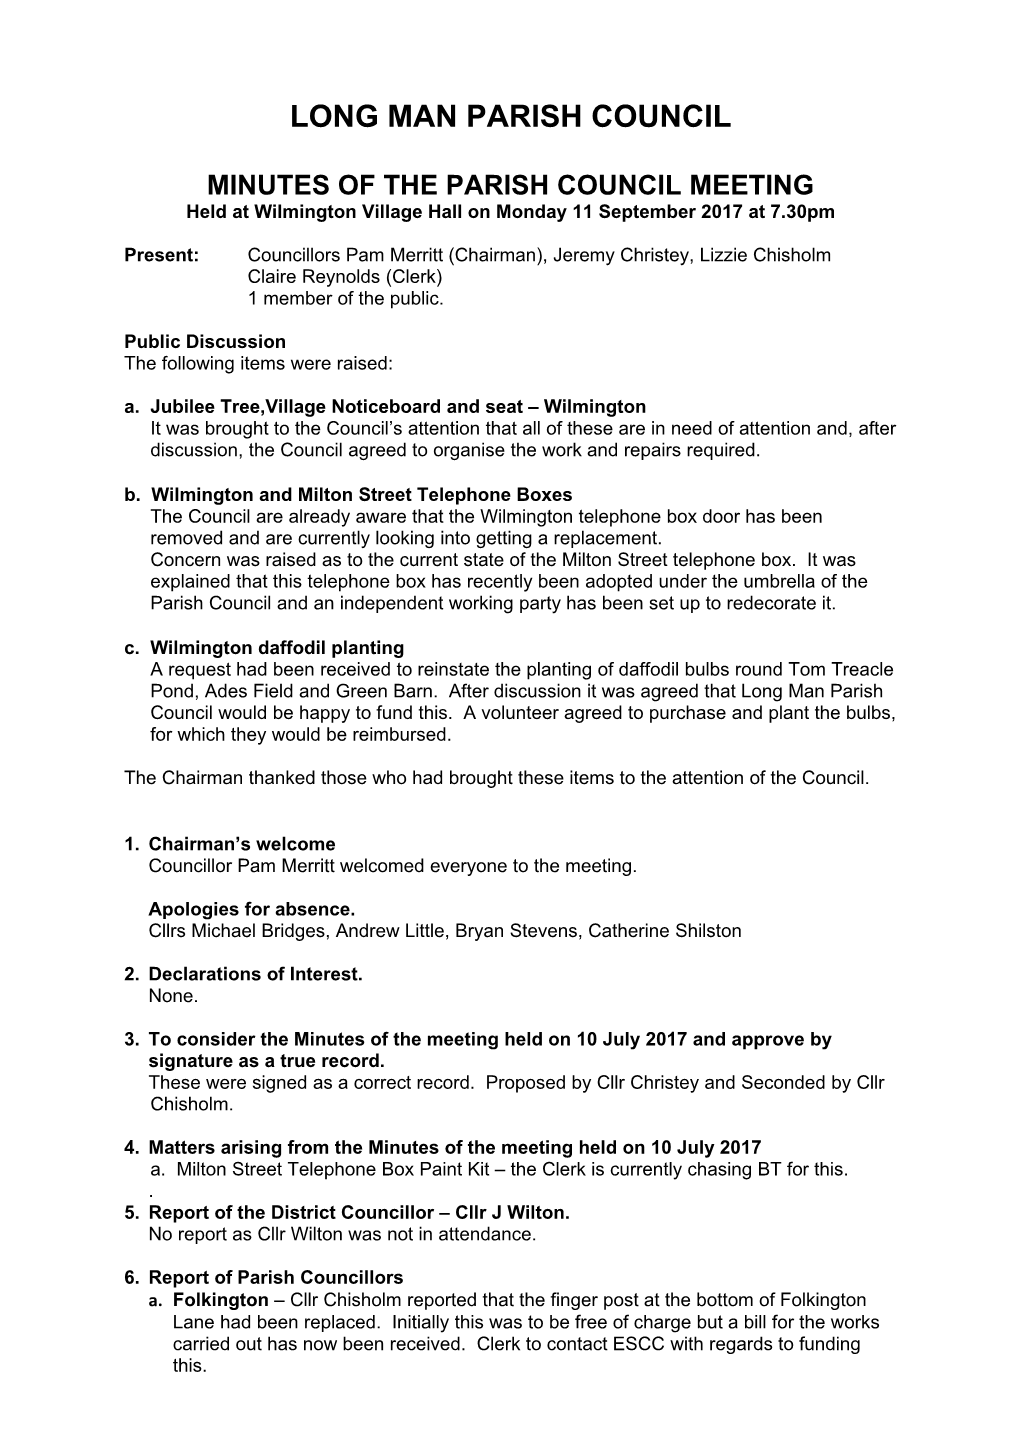 Long Man Parish Council Minutes of the Parish Council Meeting